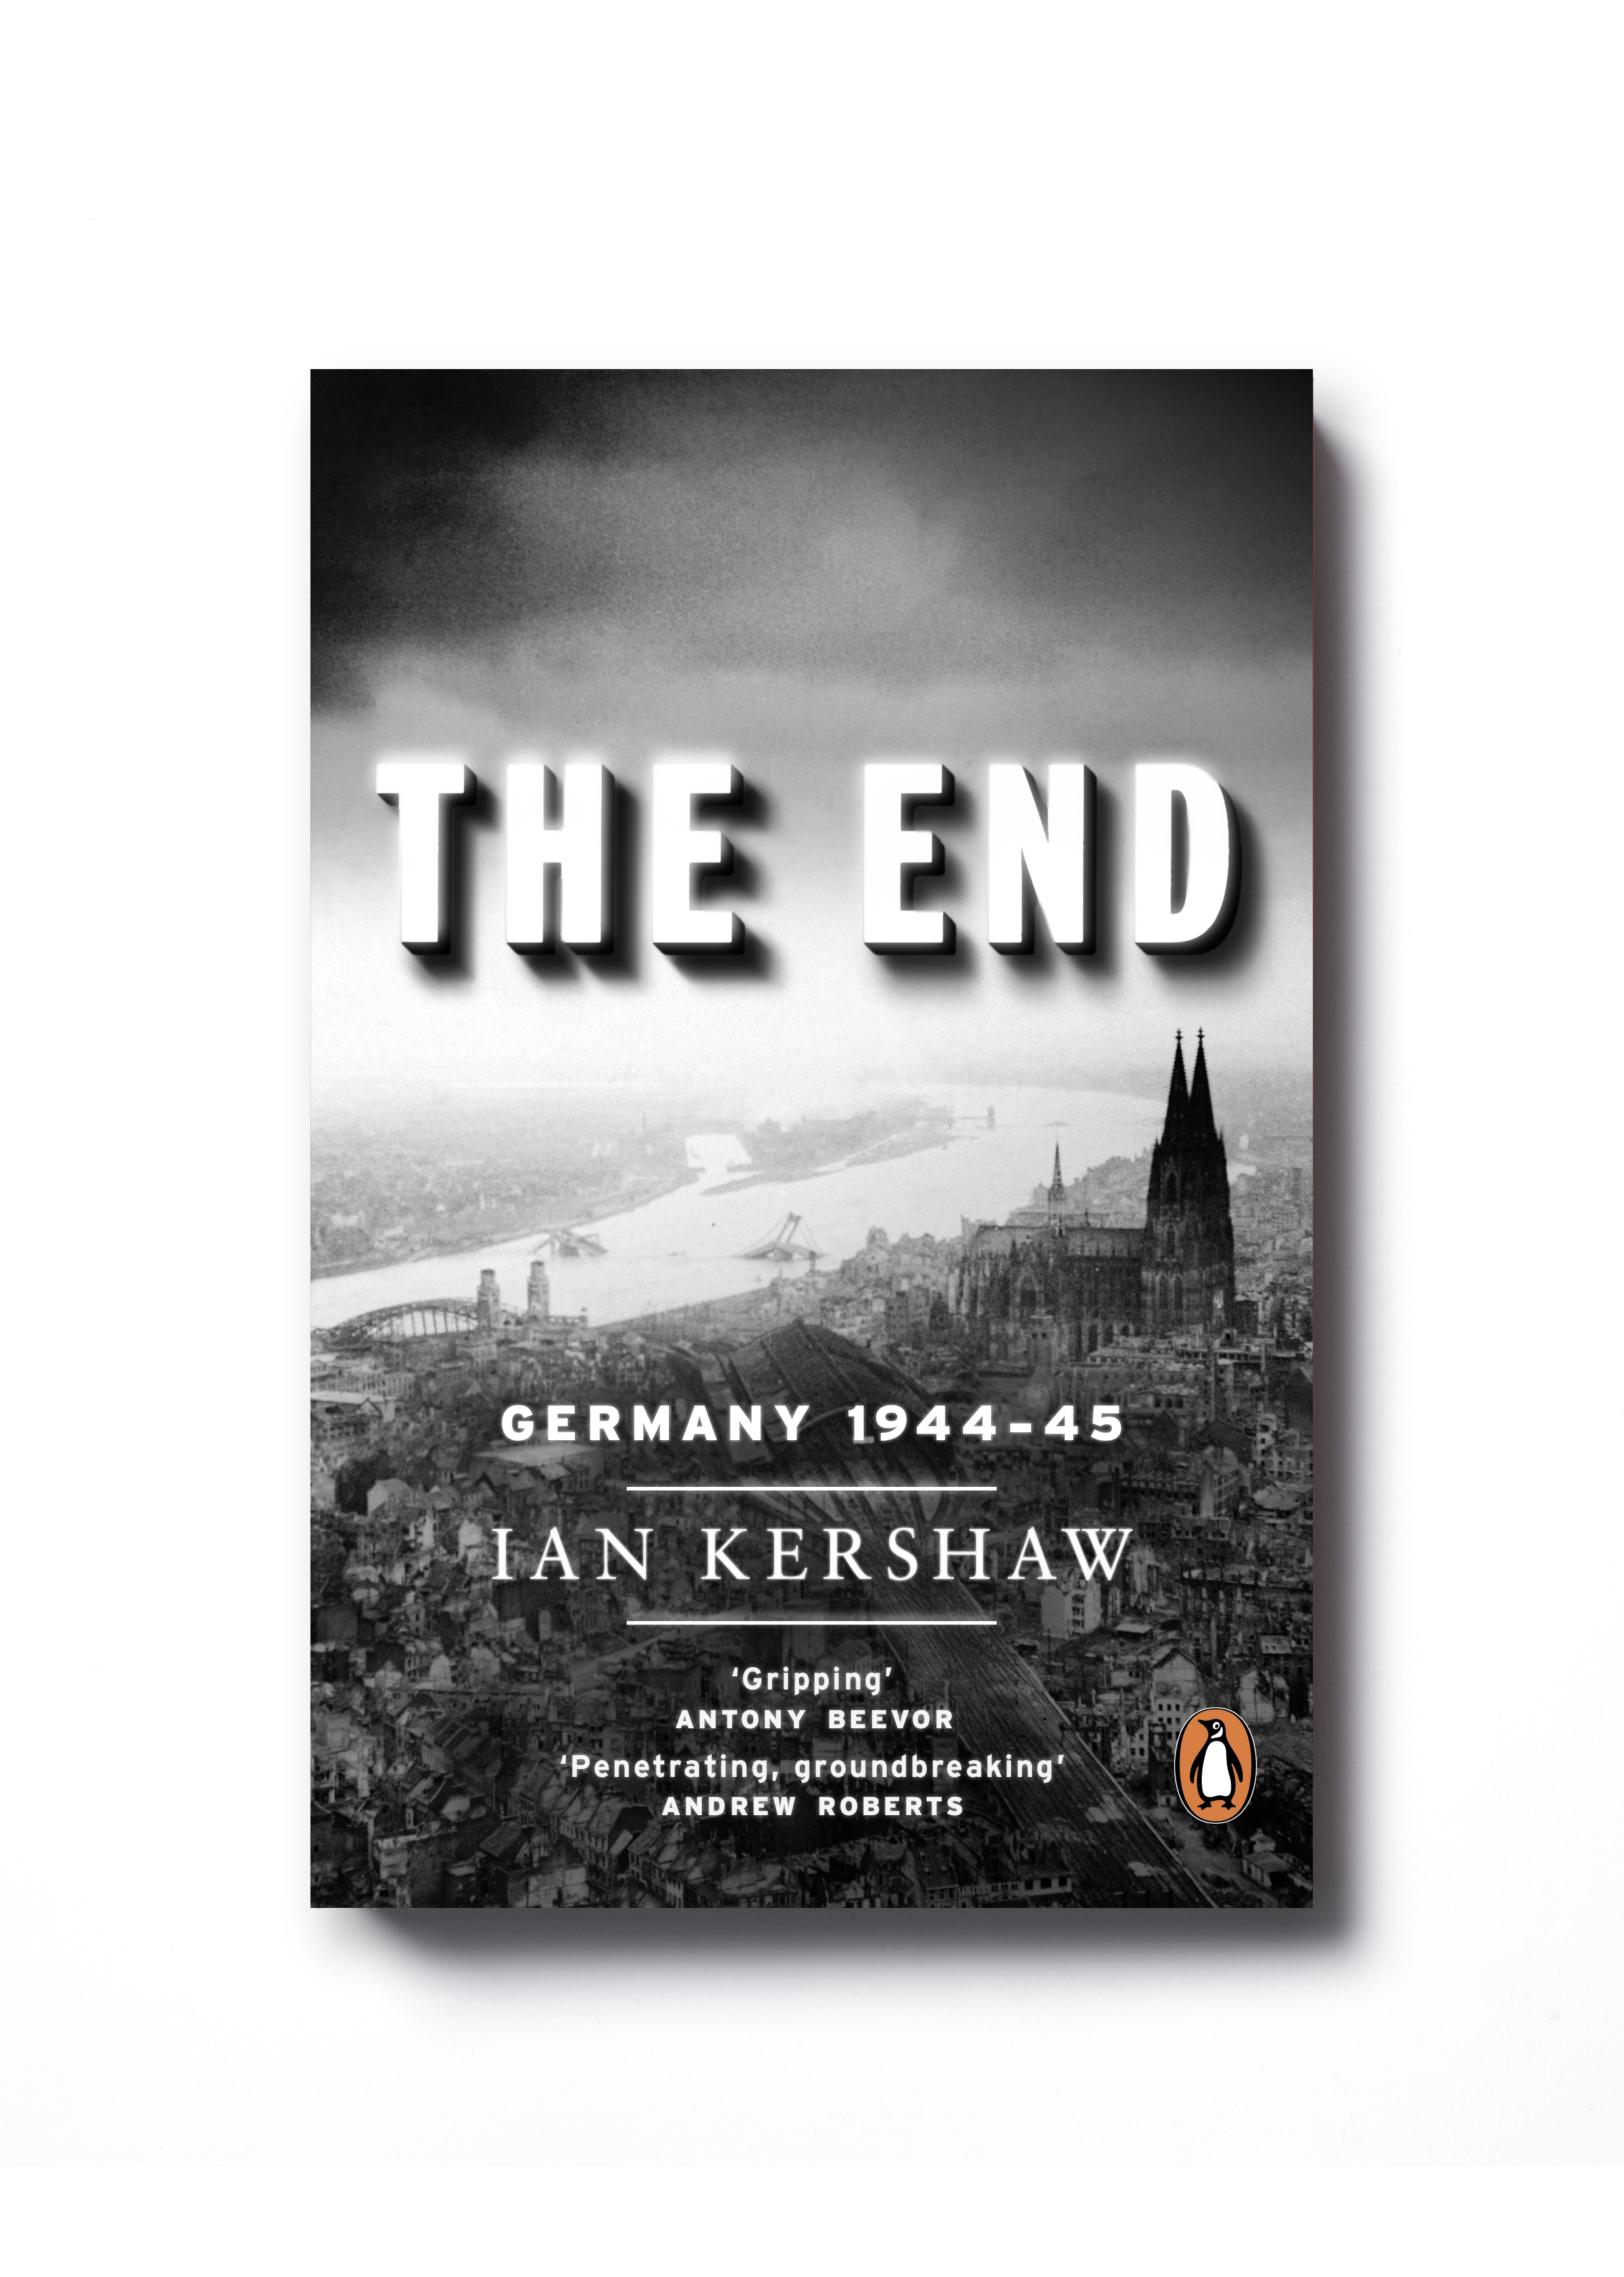  The End by Ian Kershaw - Design: Jim Stoddart  